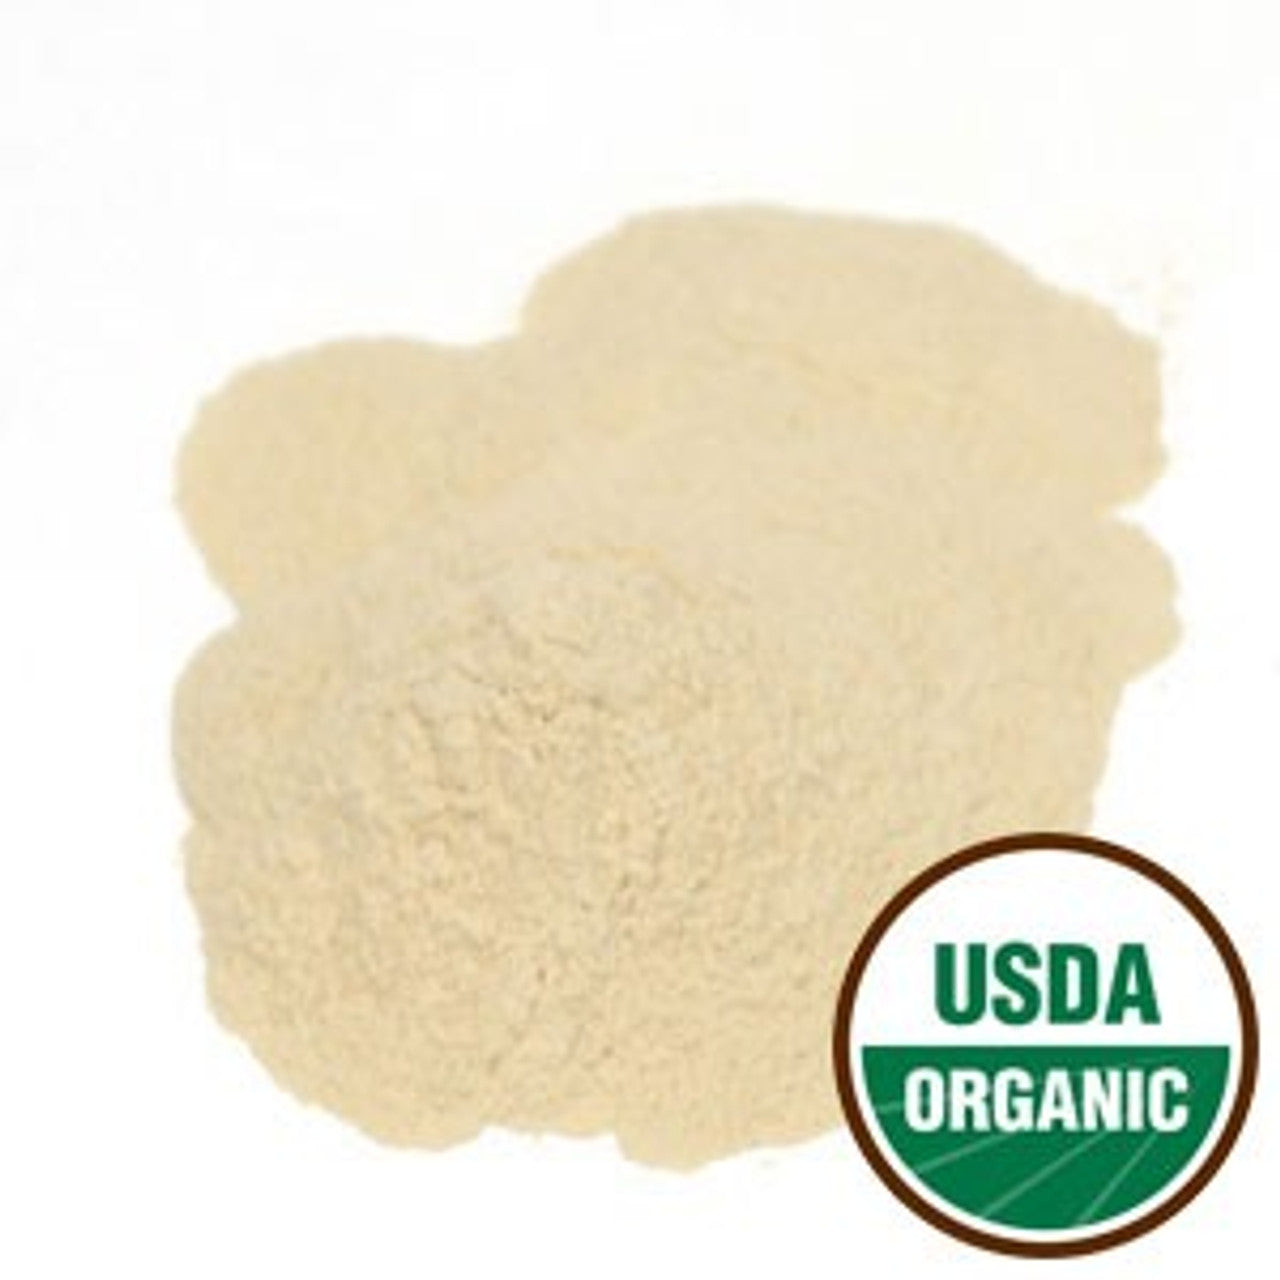 Maca Root Powder (Gelatinized) Organic